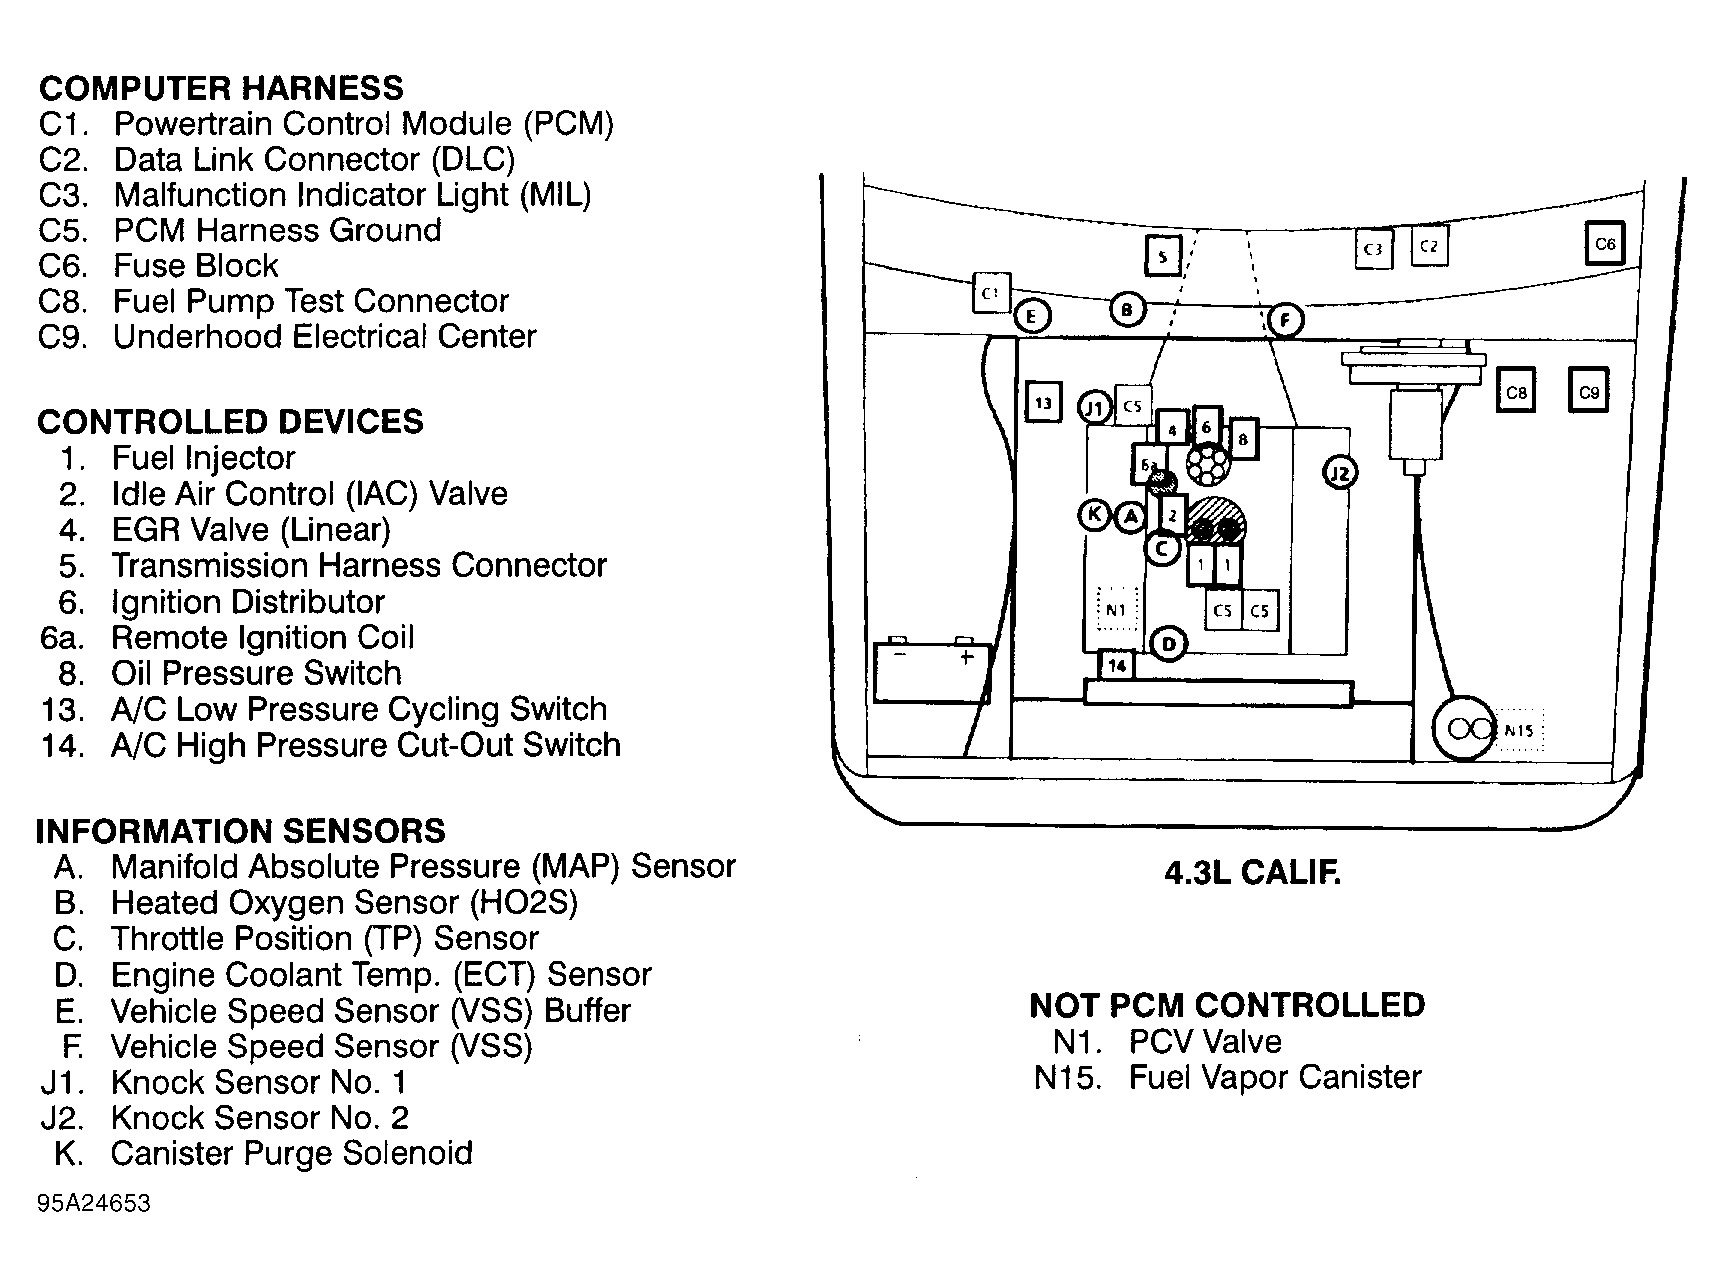 Chevrolet Pickup C1500 1995 - Component Locations -  Engine Compartment (4.3L Calif.)